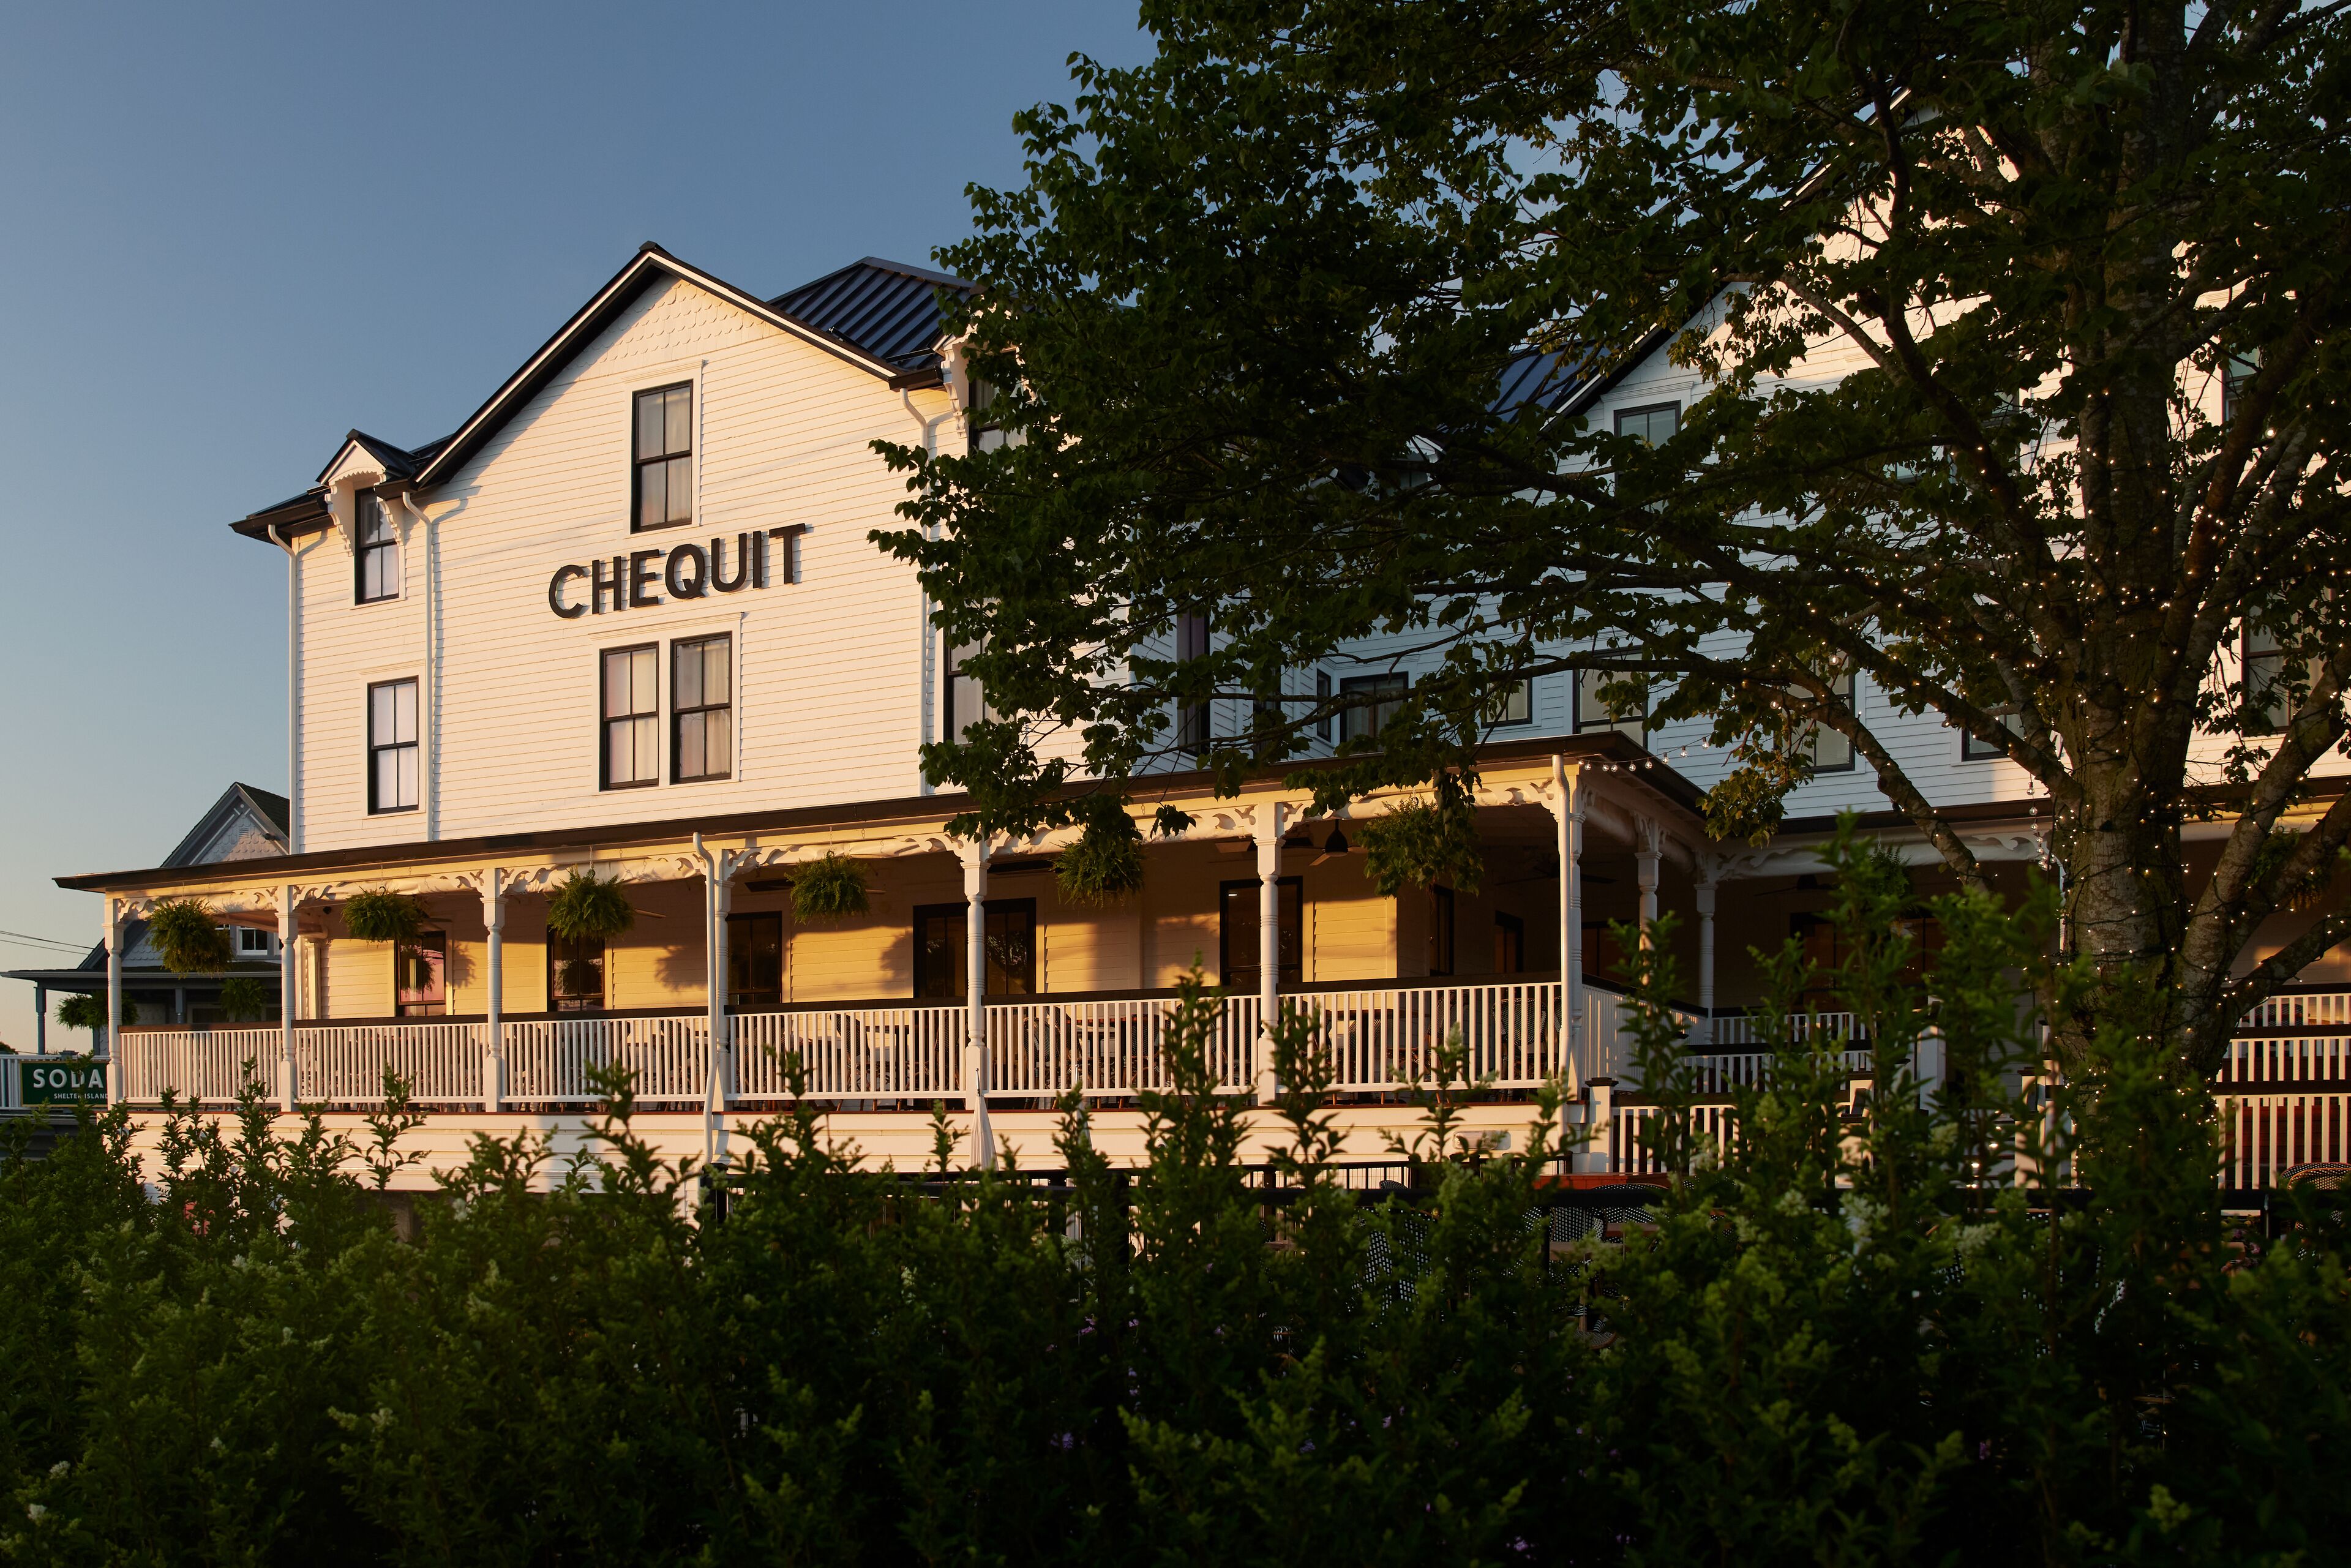 The Chequit Inn